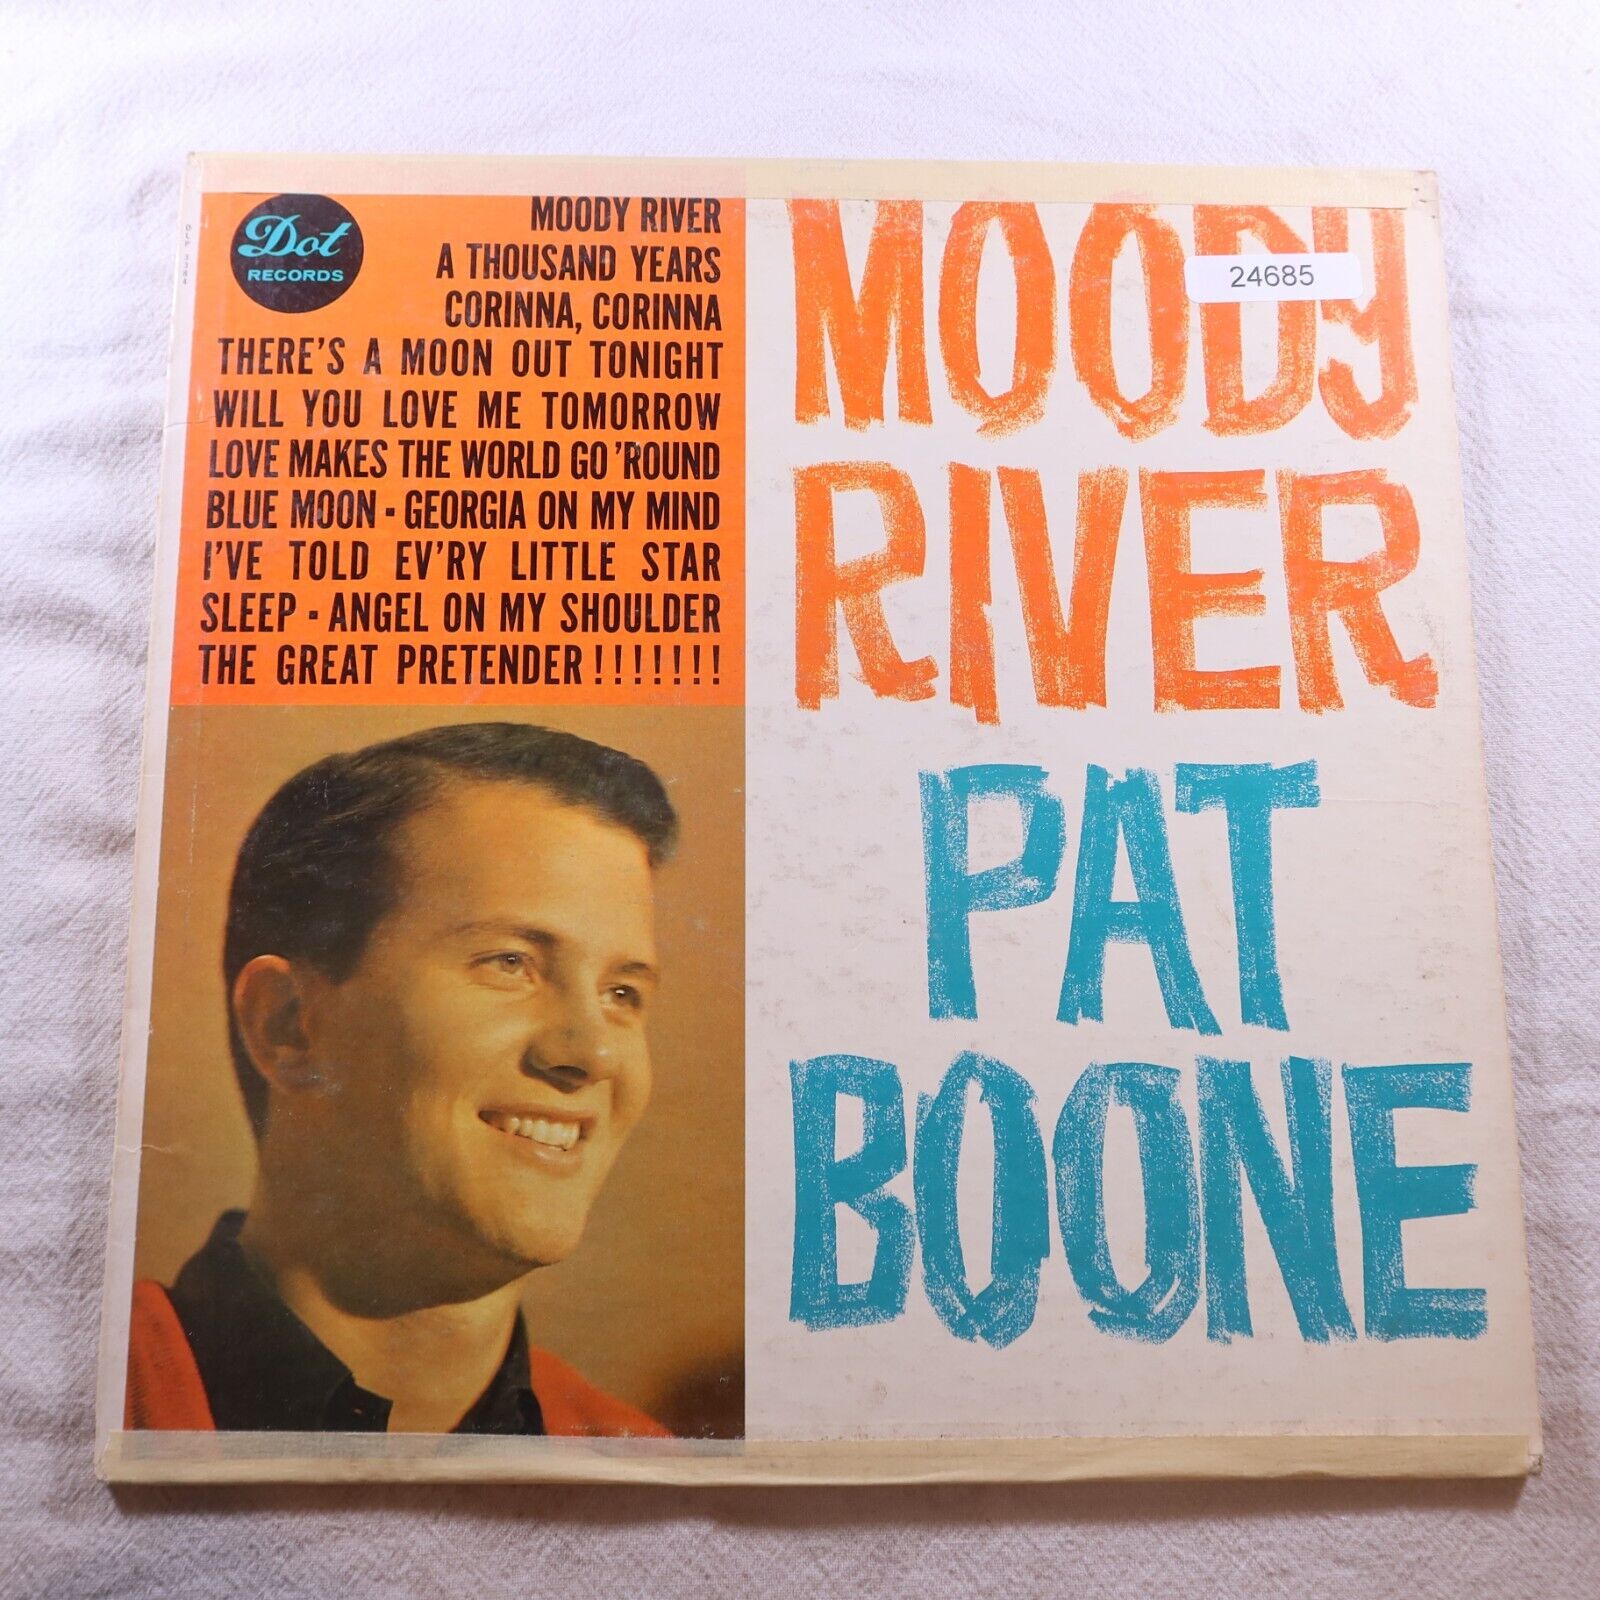 Pat Boone Moody River   Record Album Vinyl LP